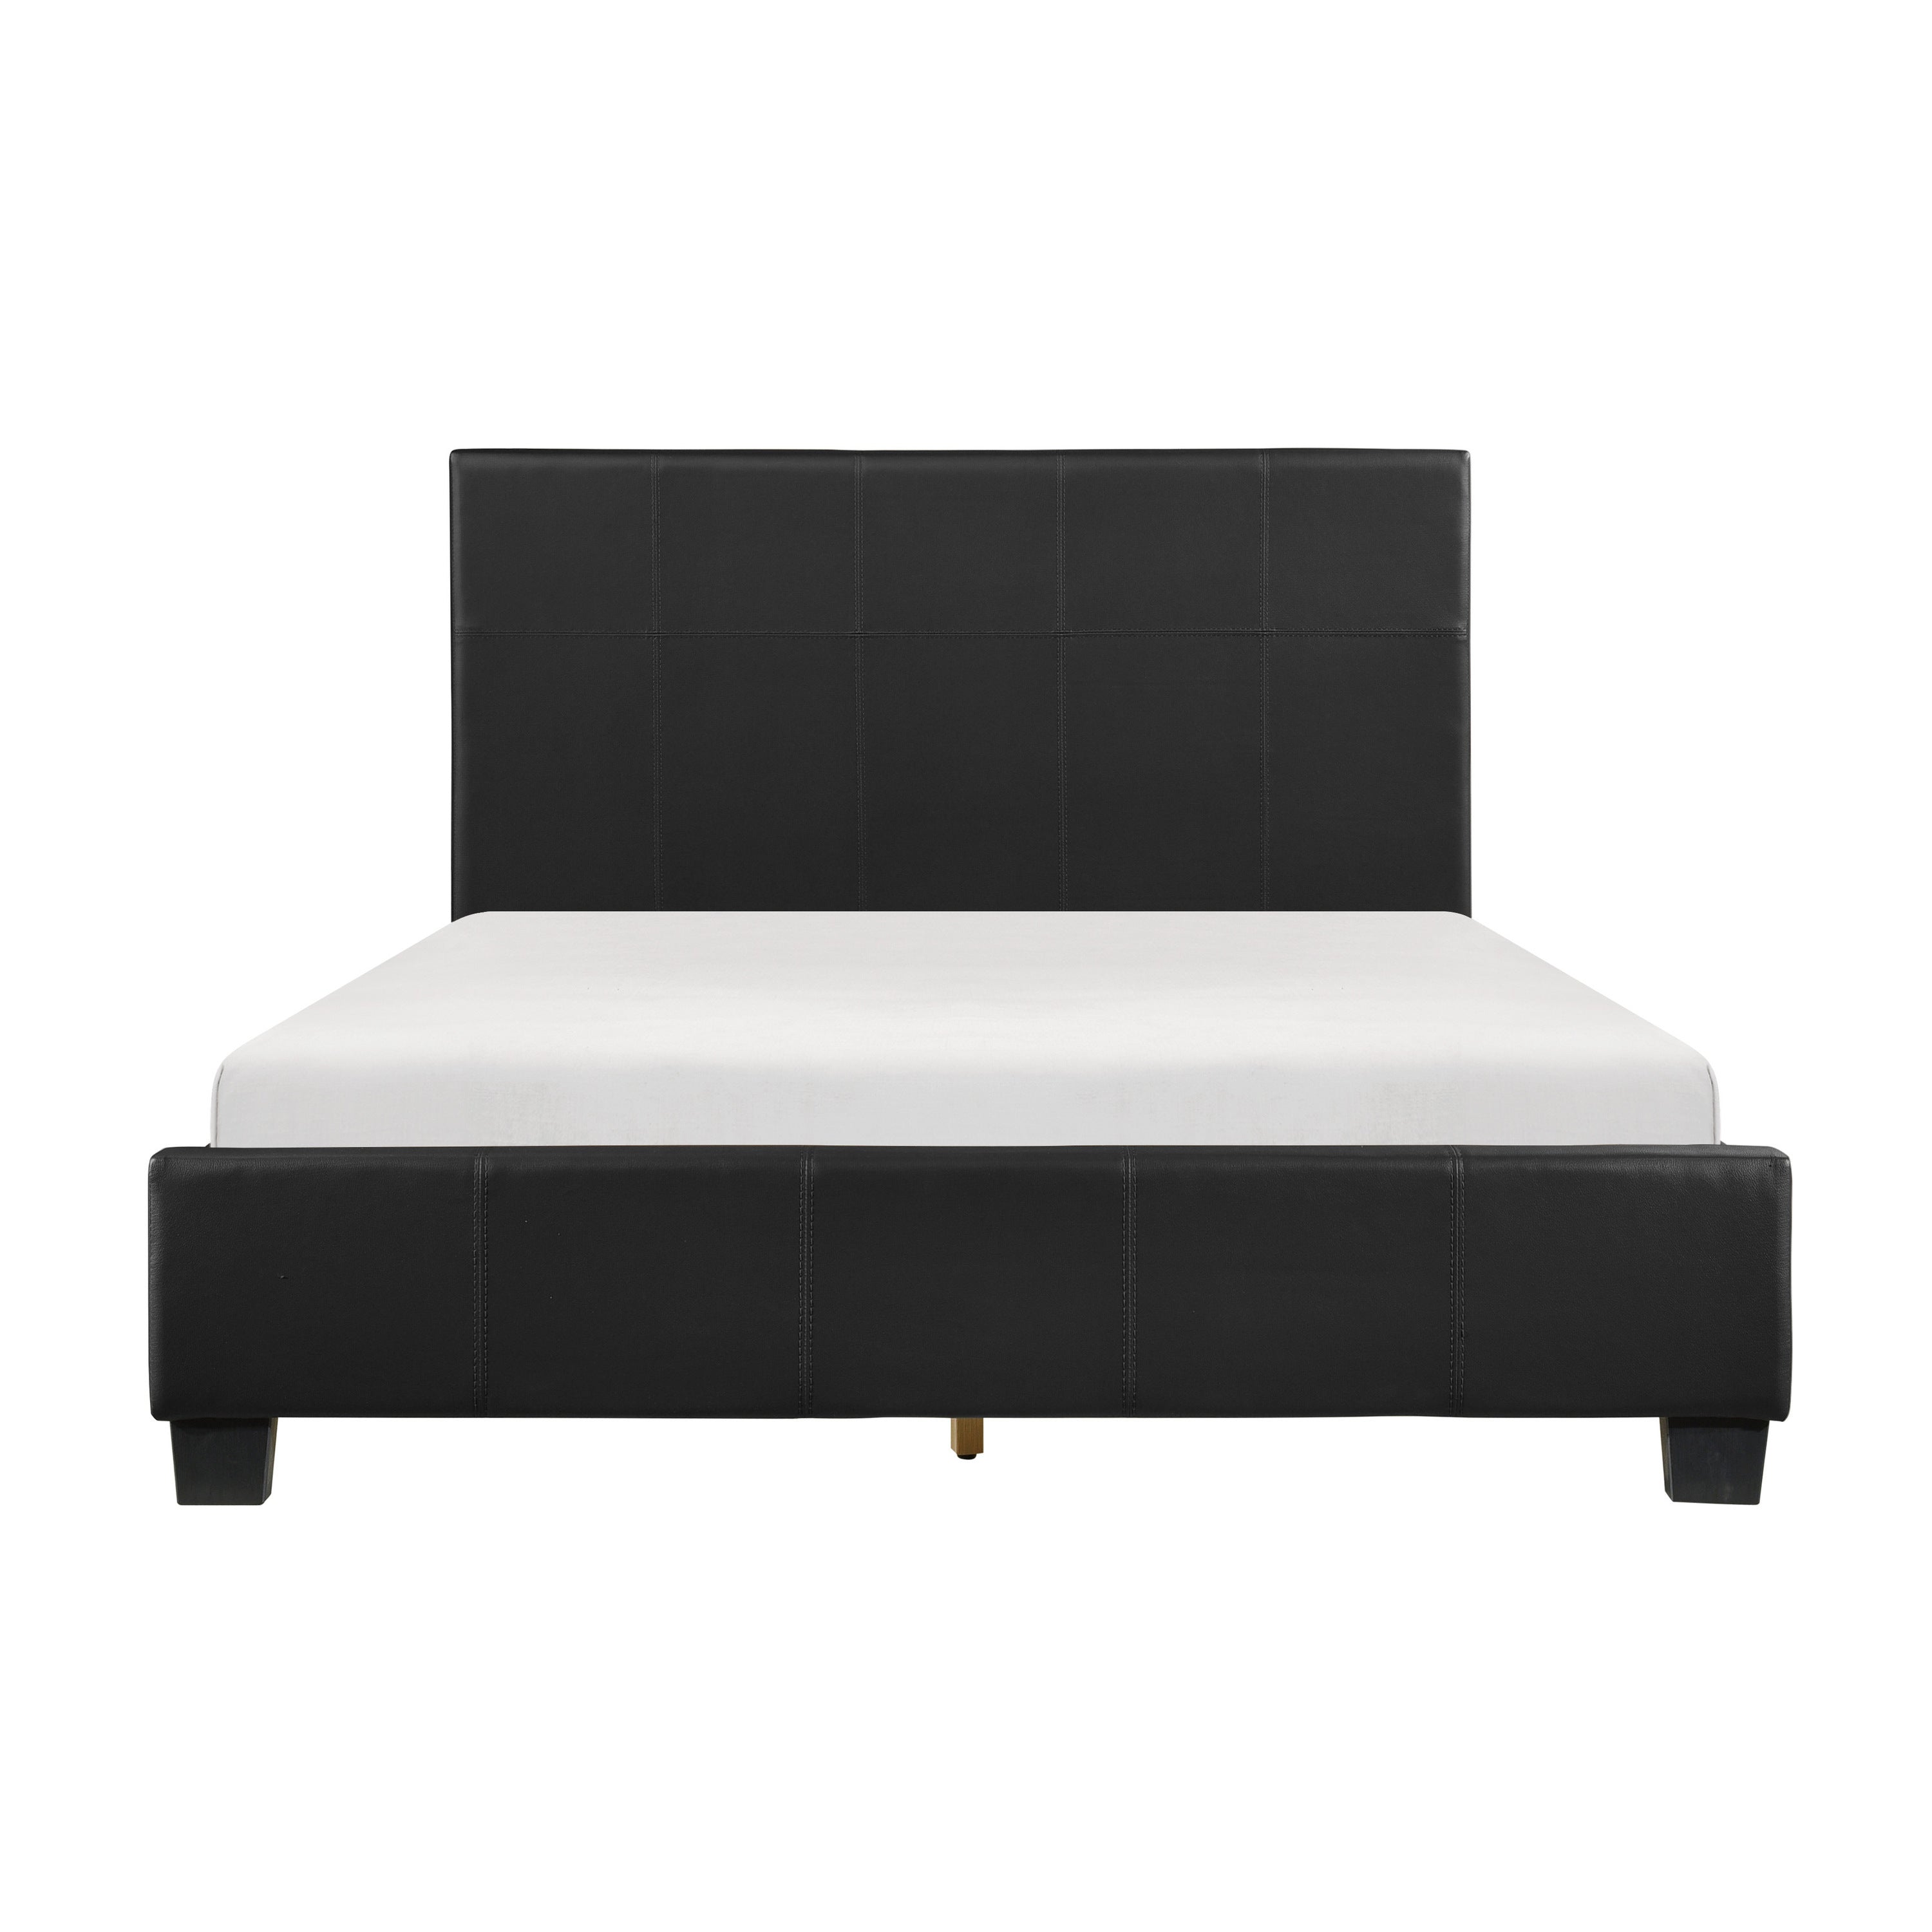 King Size Bed Leather Upholstered (Black)